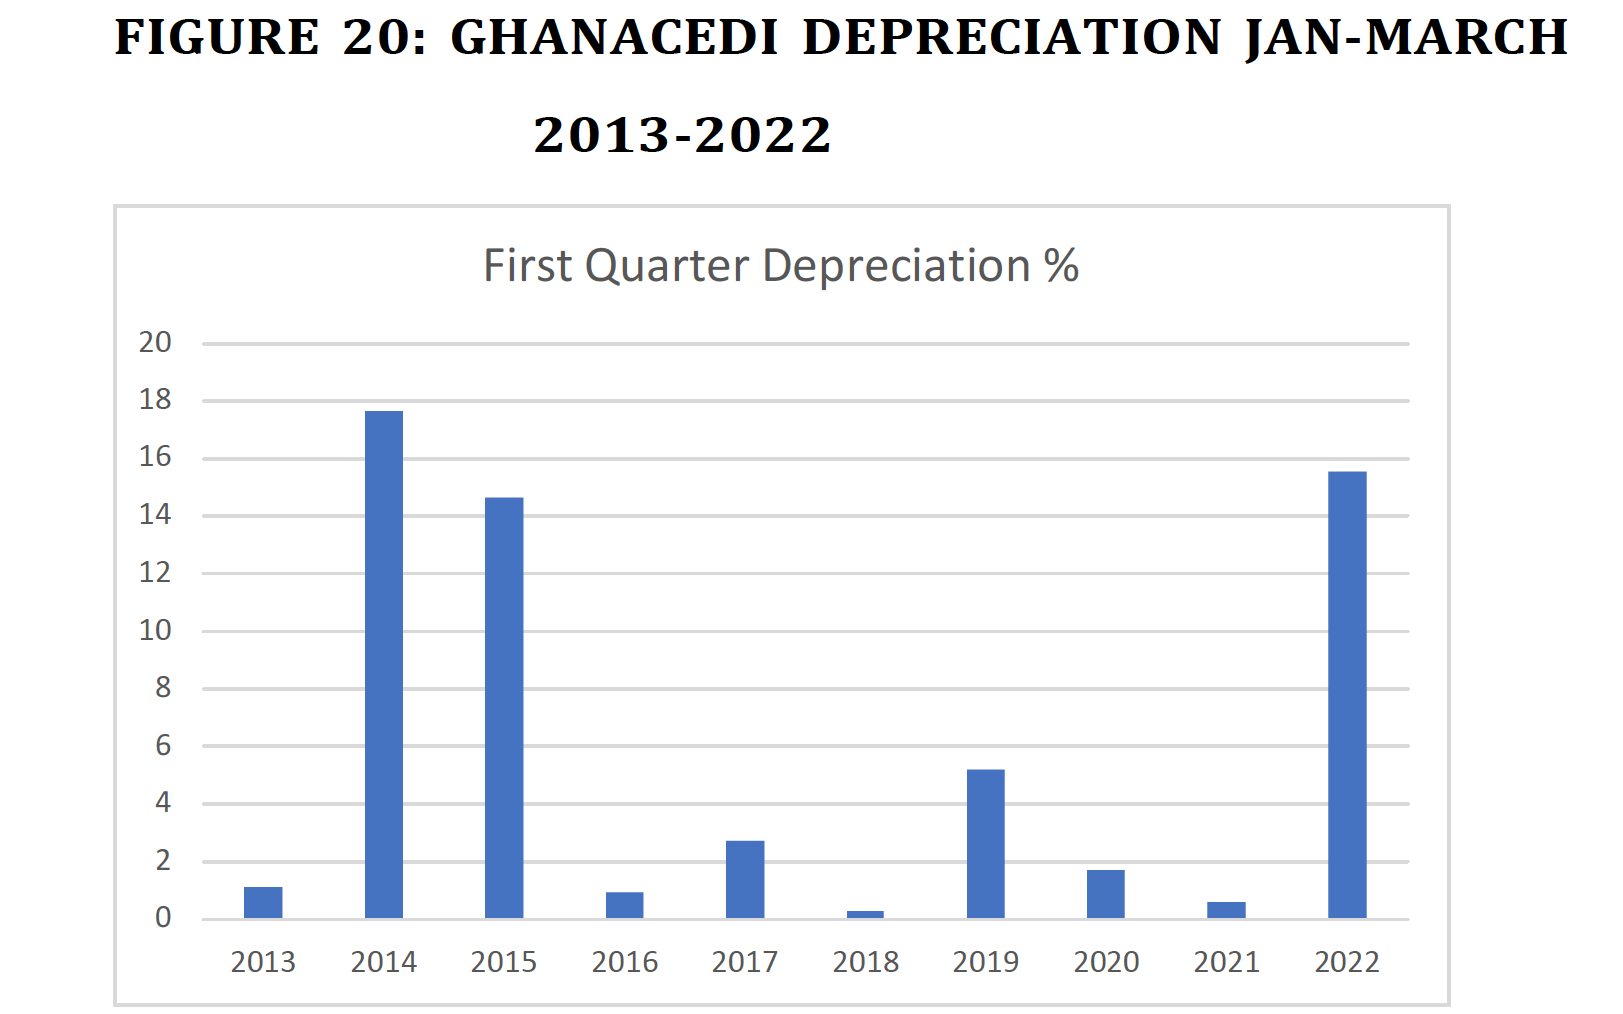 Figure 19: Cedi Depreciation Jan-March 2013 - 2022, Source: Bank of Ghana